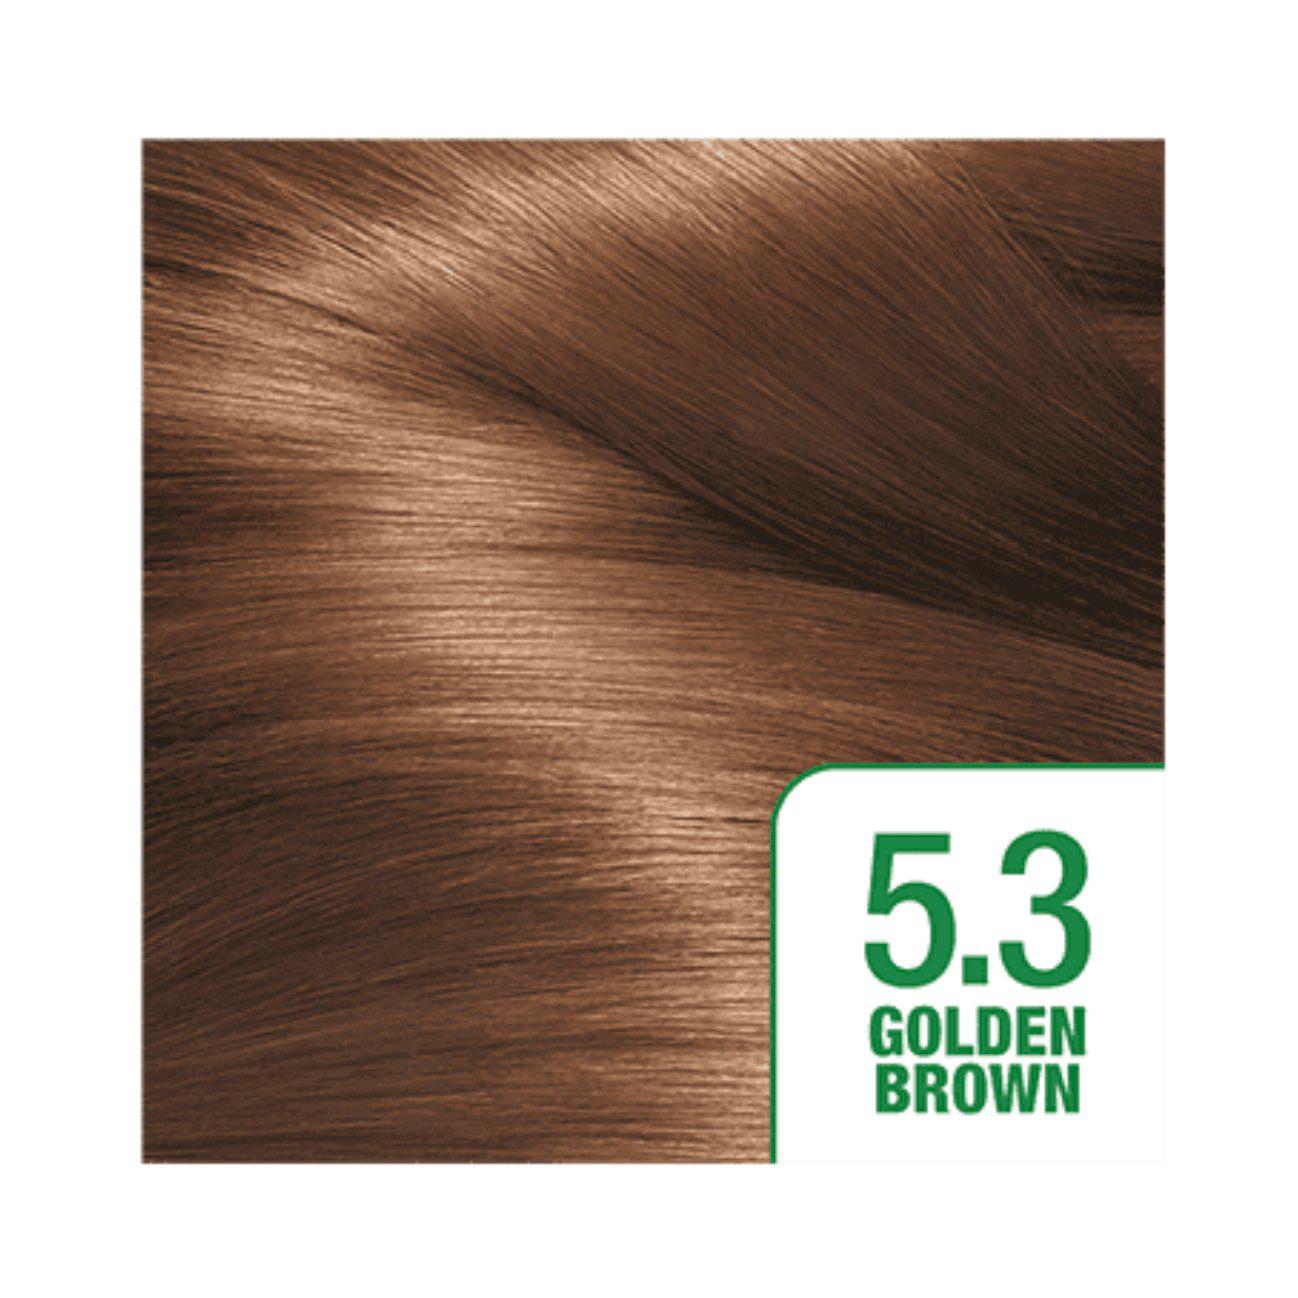 Garnier Nutrisse Permanent Hair Dye - 100% Grey Hair Coverage - Golden Brown 5.3 - Healthxpress.ie